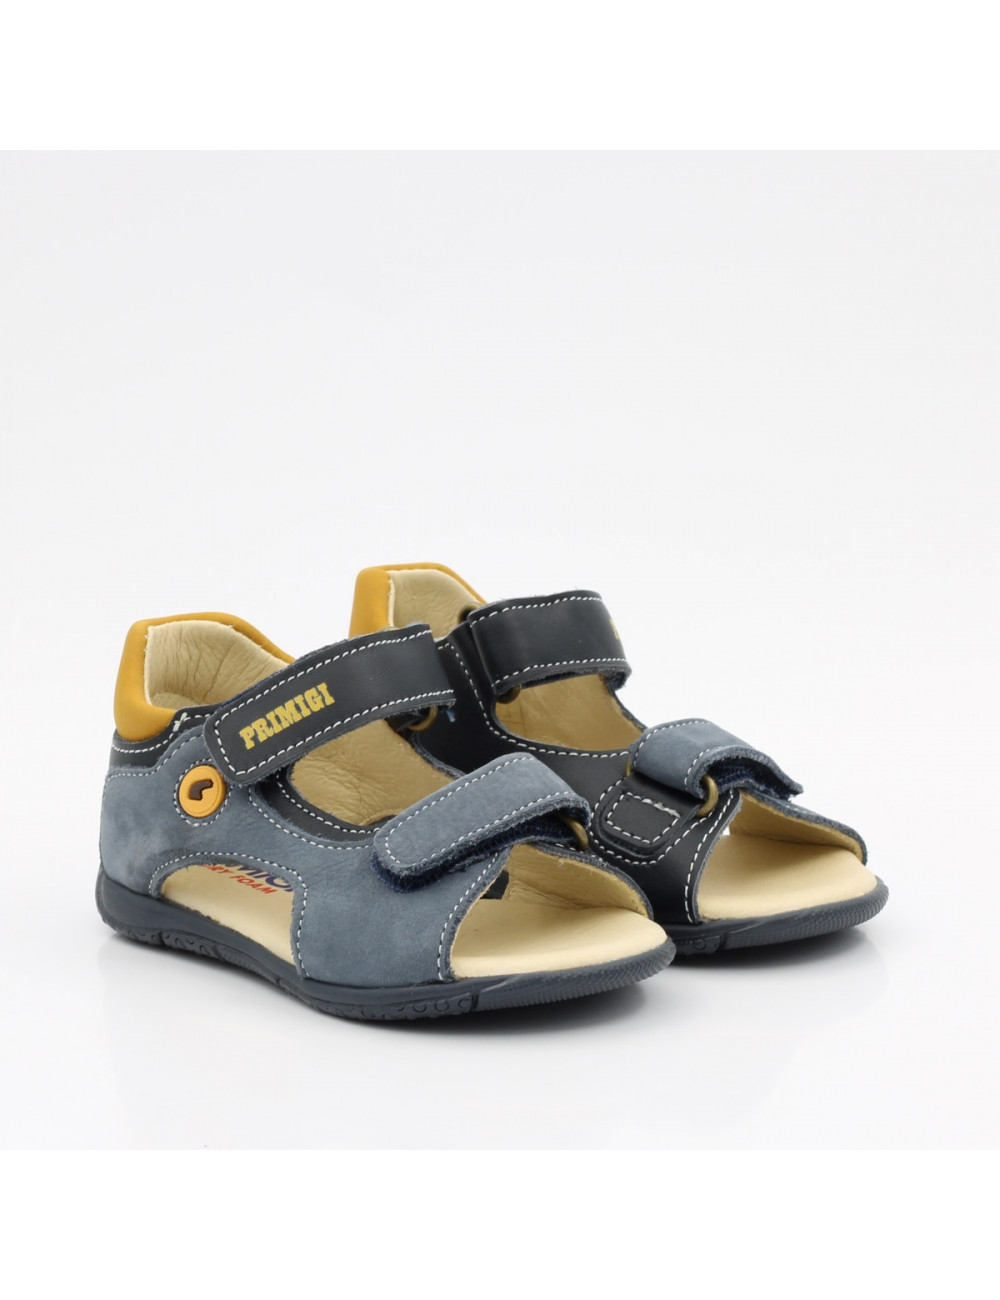 Primigi children's outdoor sandals 5912622